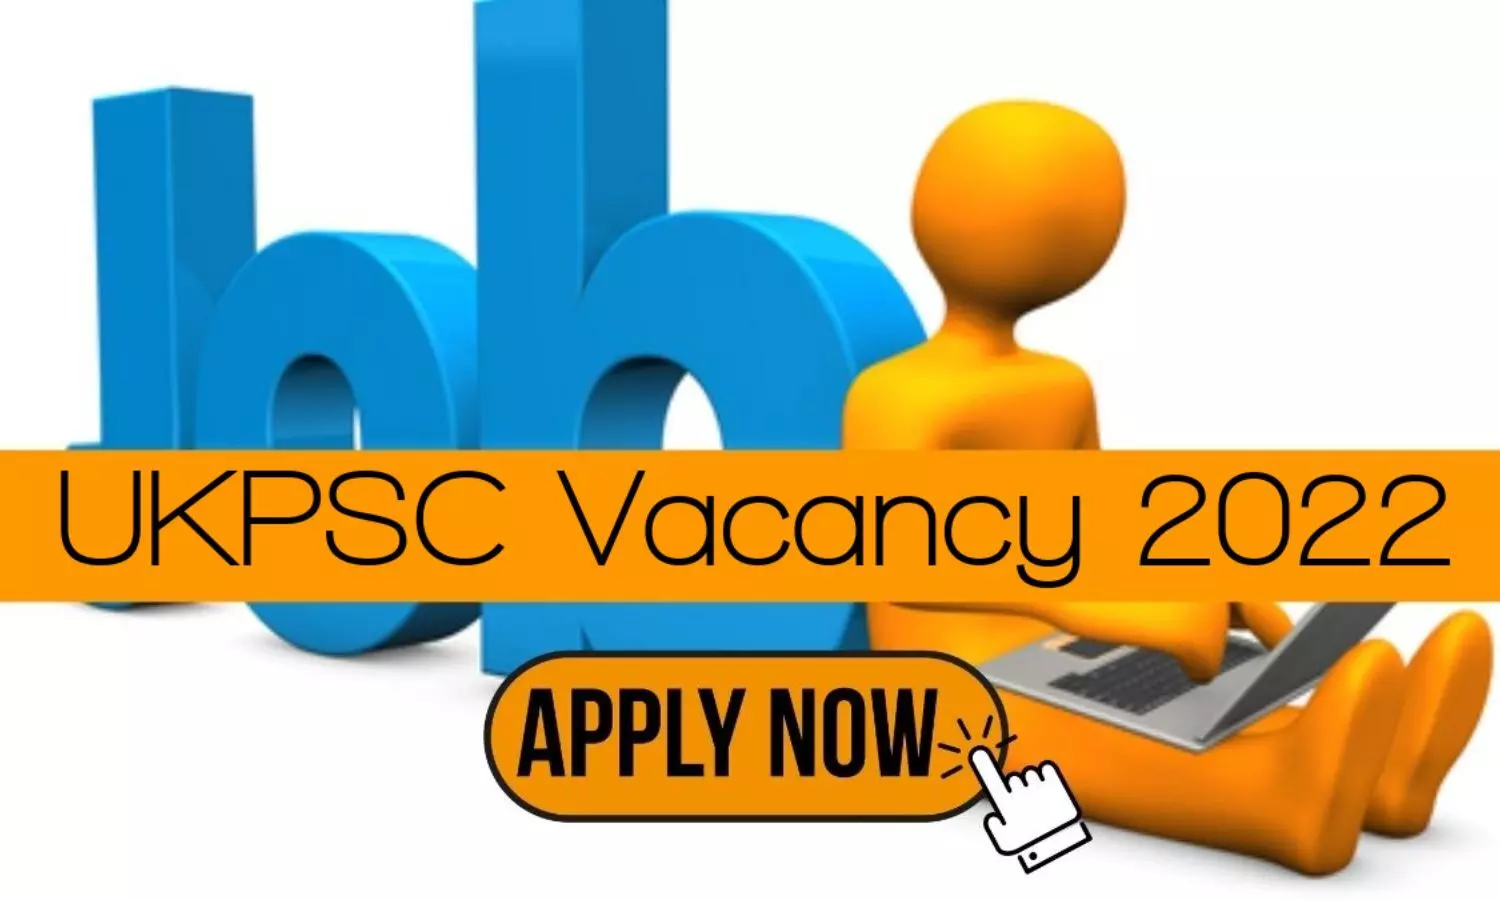 UKPSC recruitment 2022 Assistant Accountant notification released